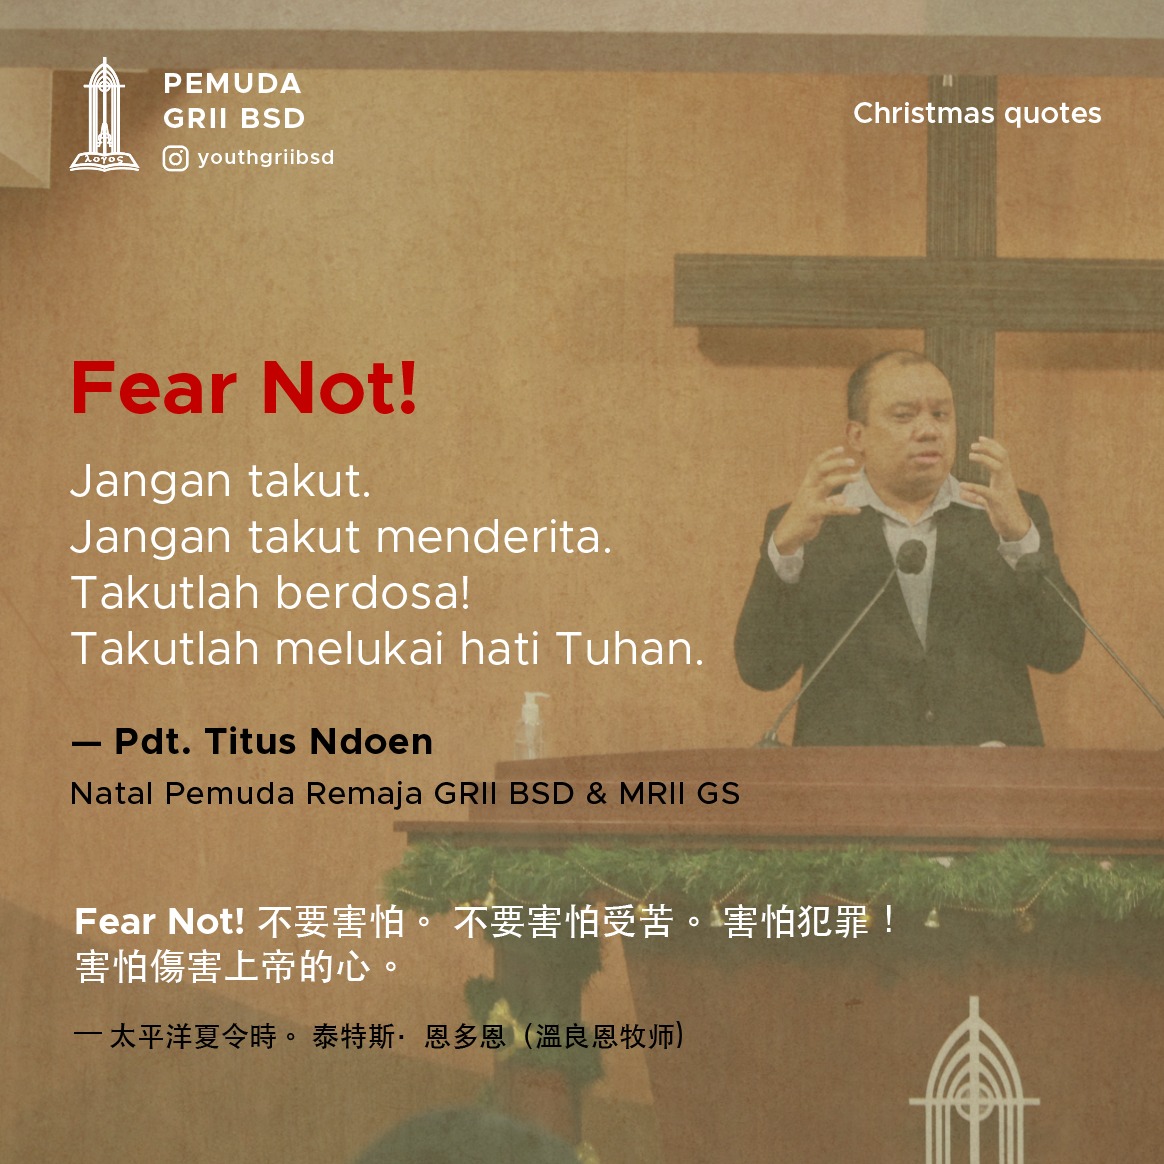 Fear Not! Jangan takut. Jangan takut menderita. Takutlah berdosa! Takutlah melukai hati Tuhan.